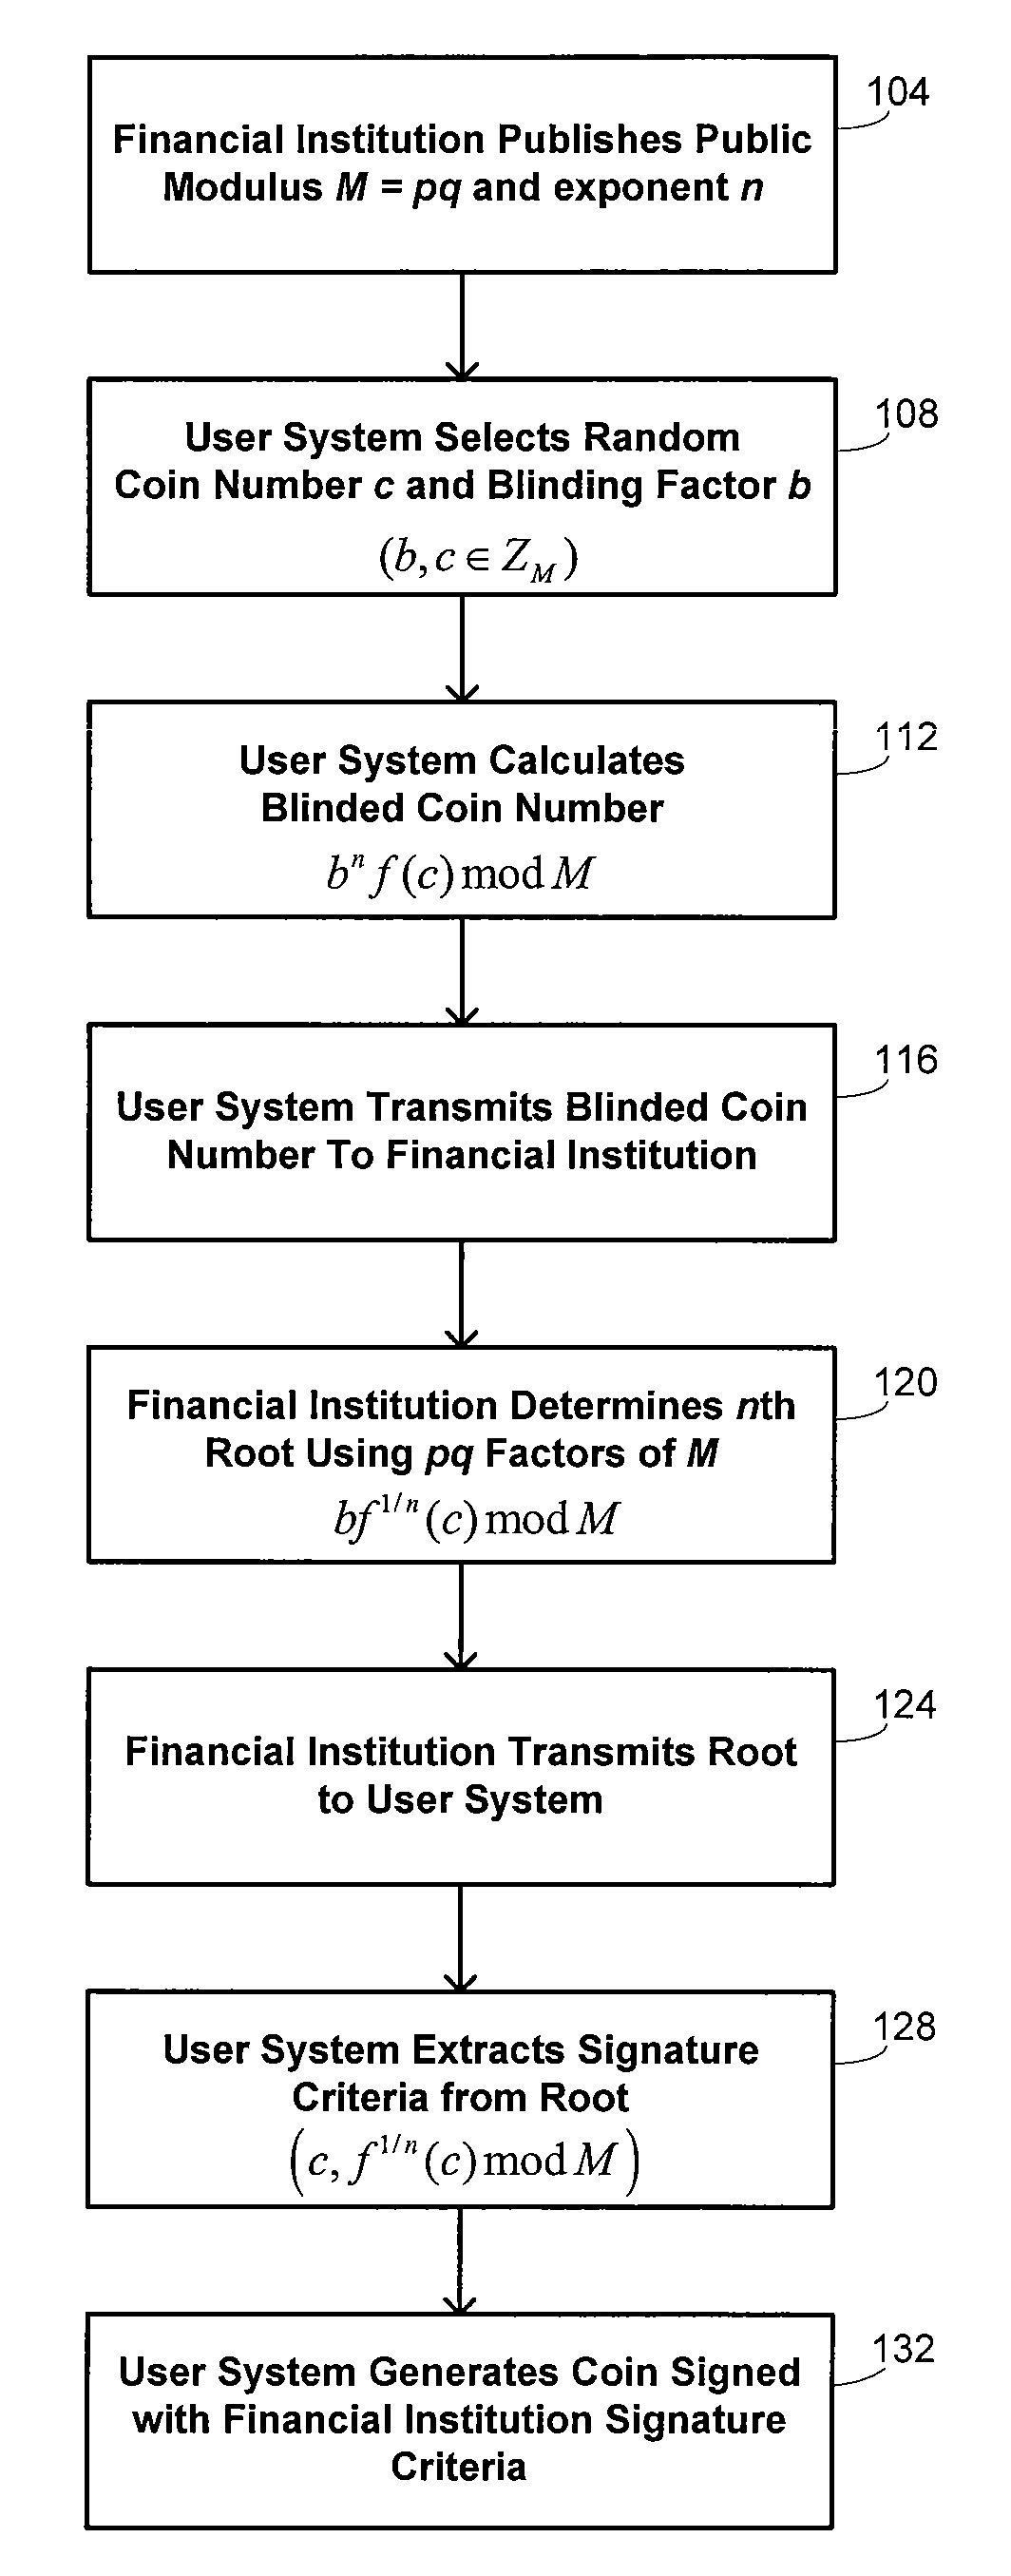 Money transfers using digital cash